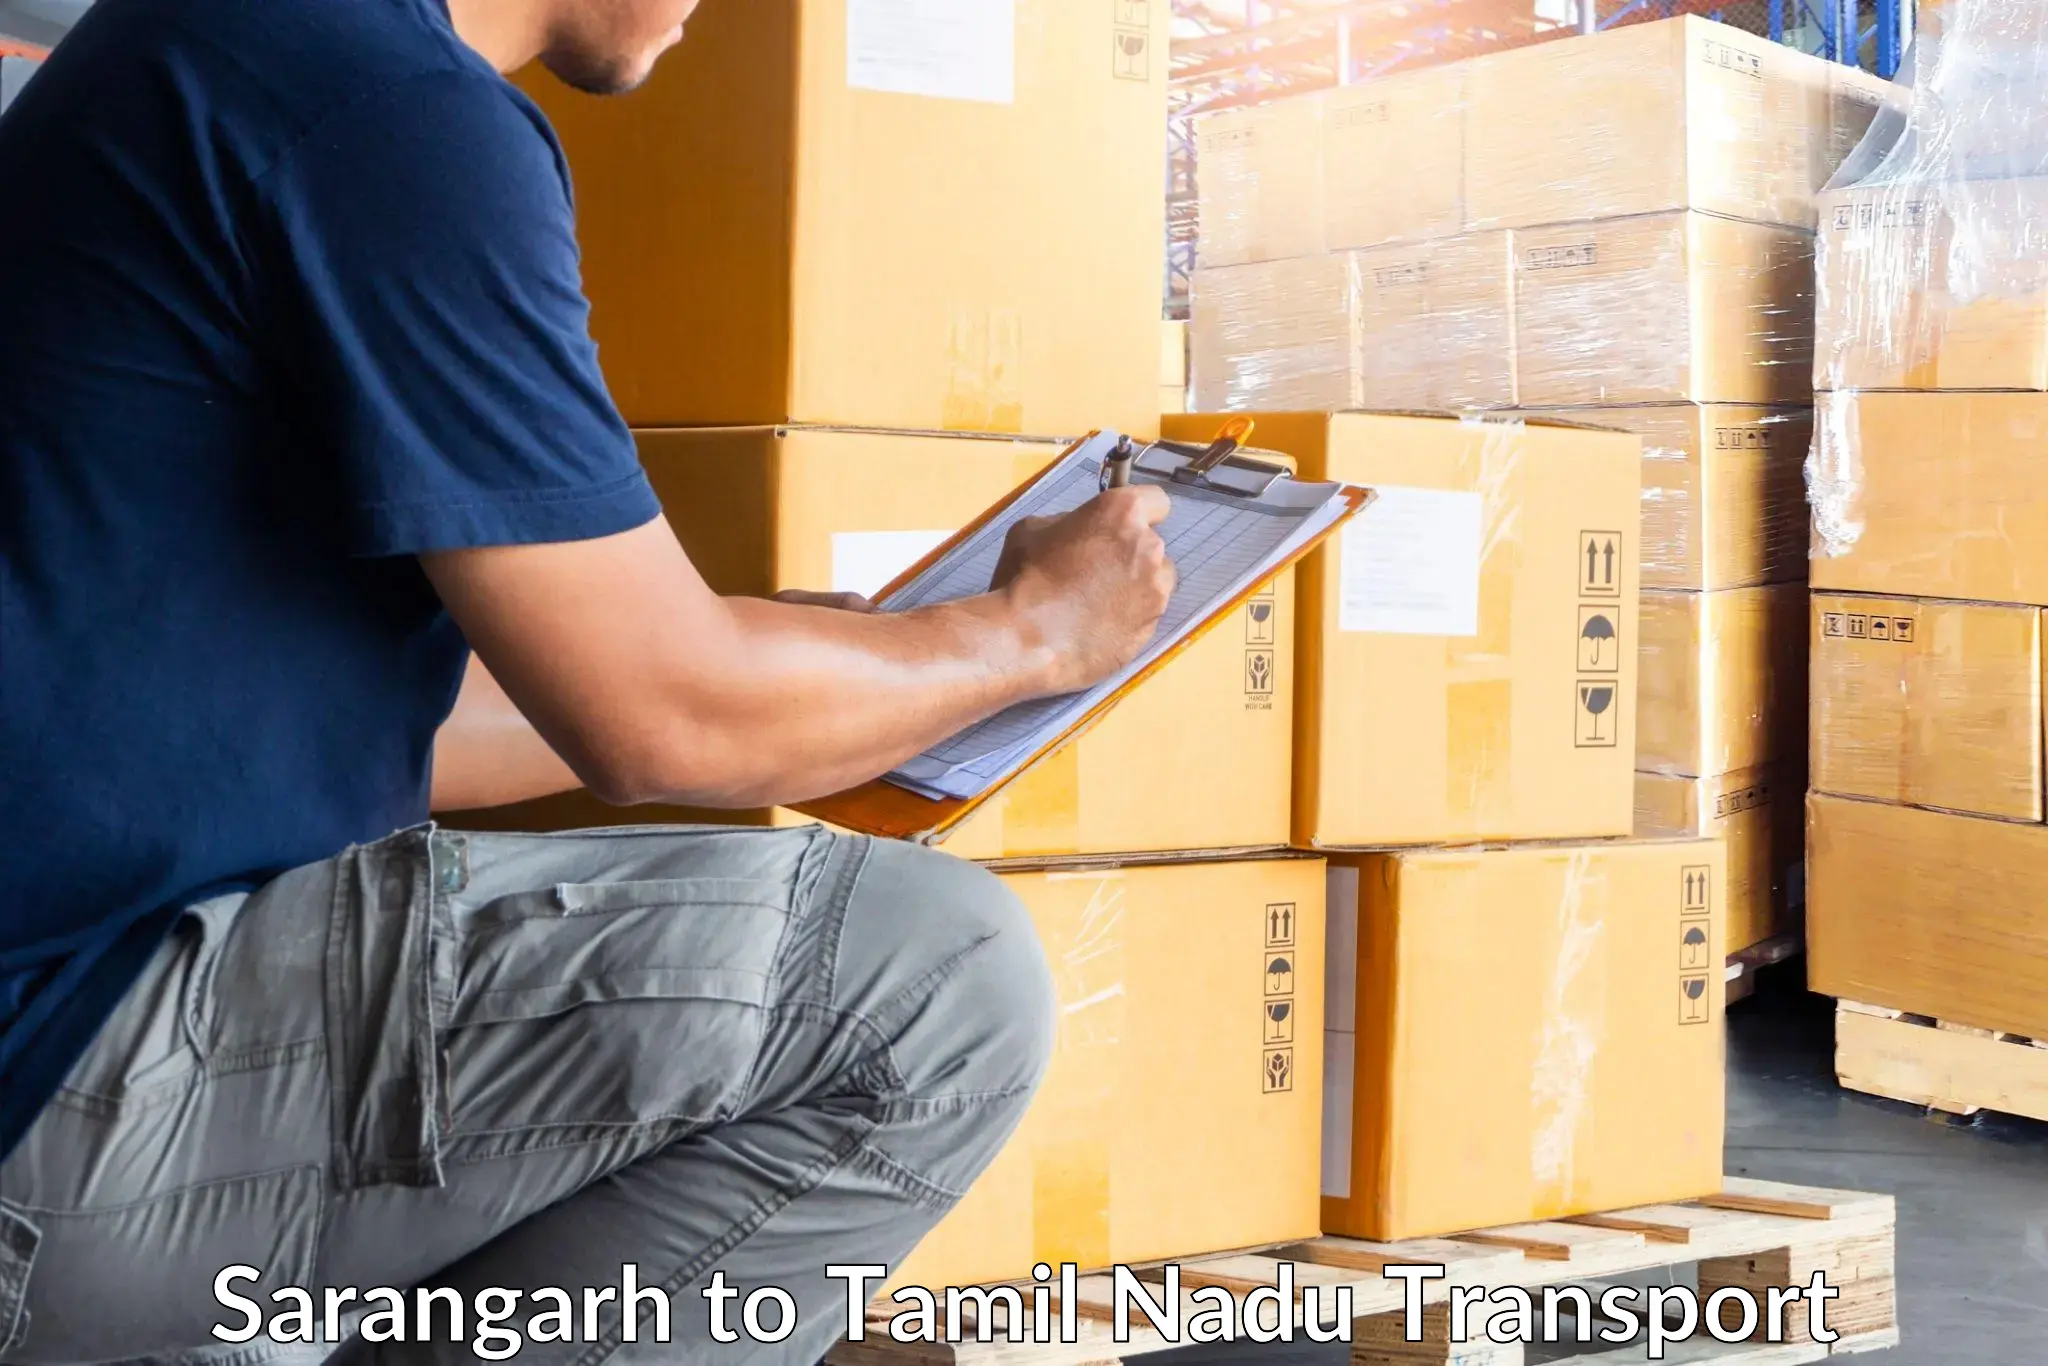 Container transport service Sarangarh to Tamil Nadu